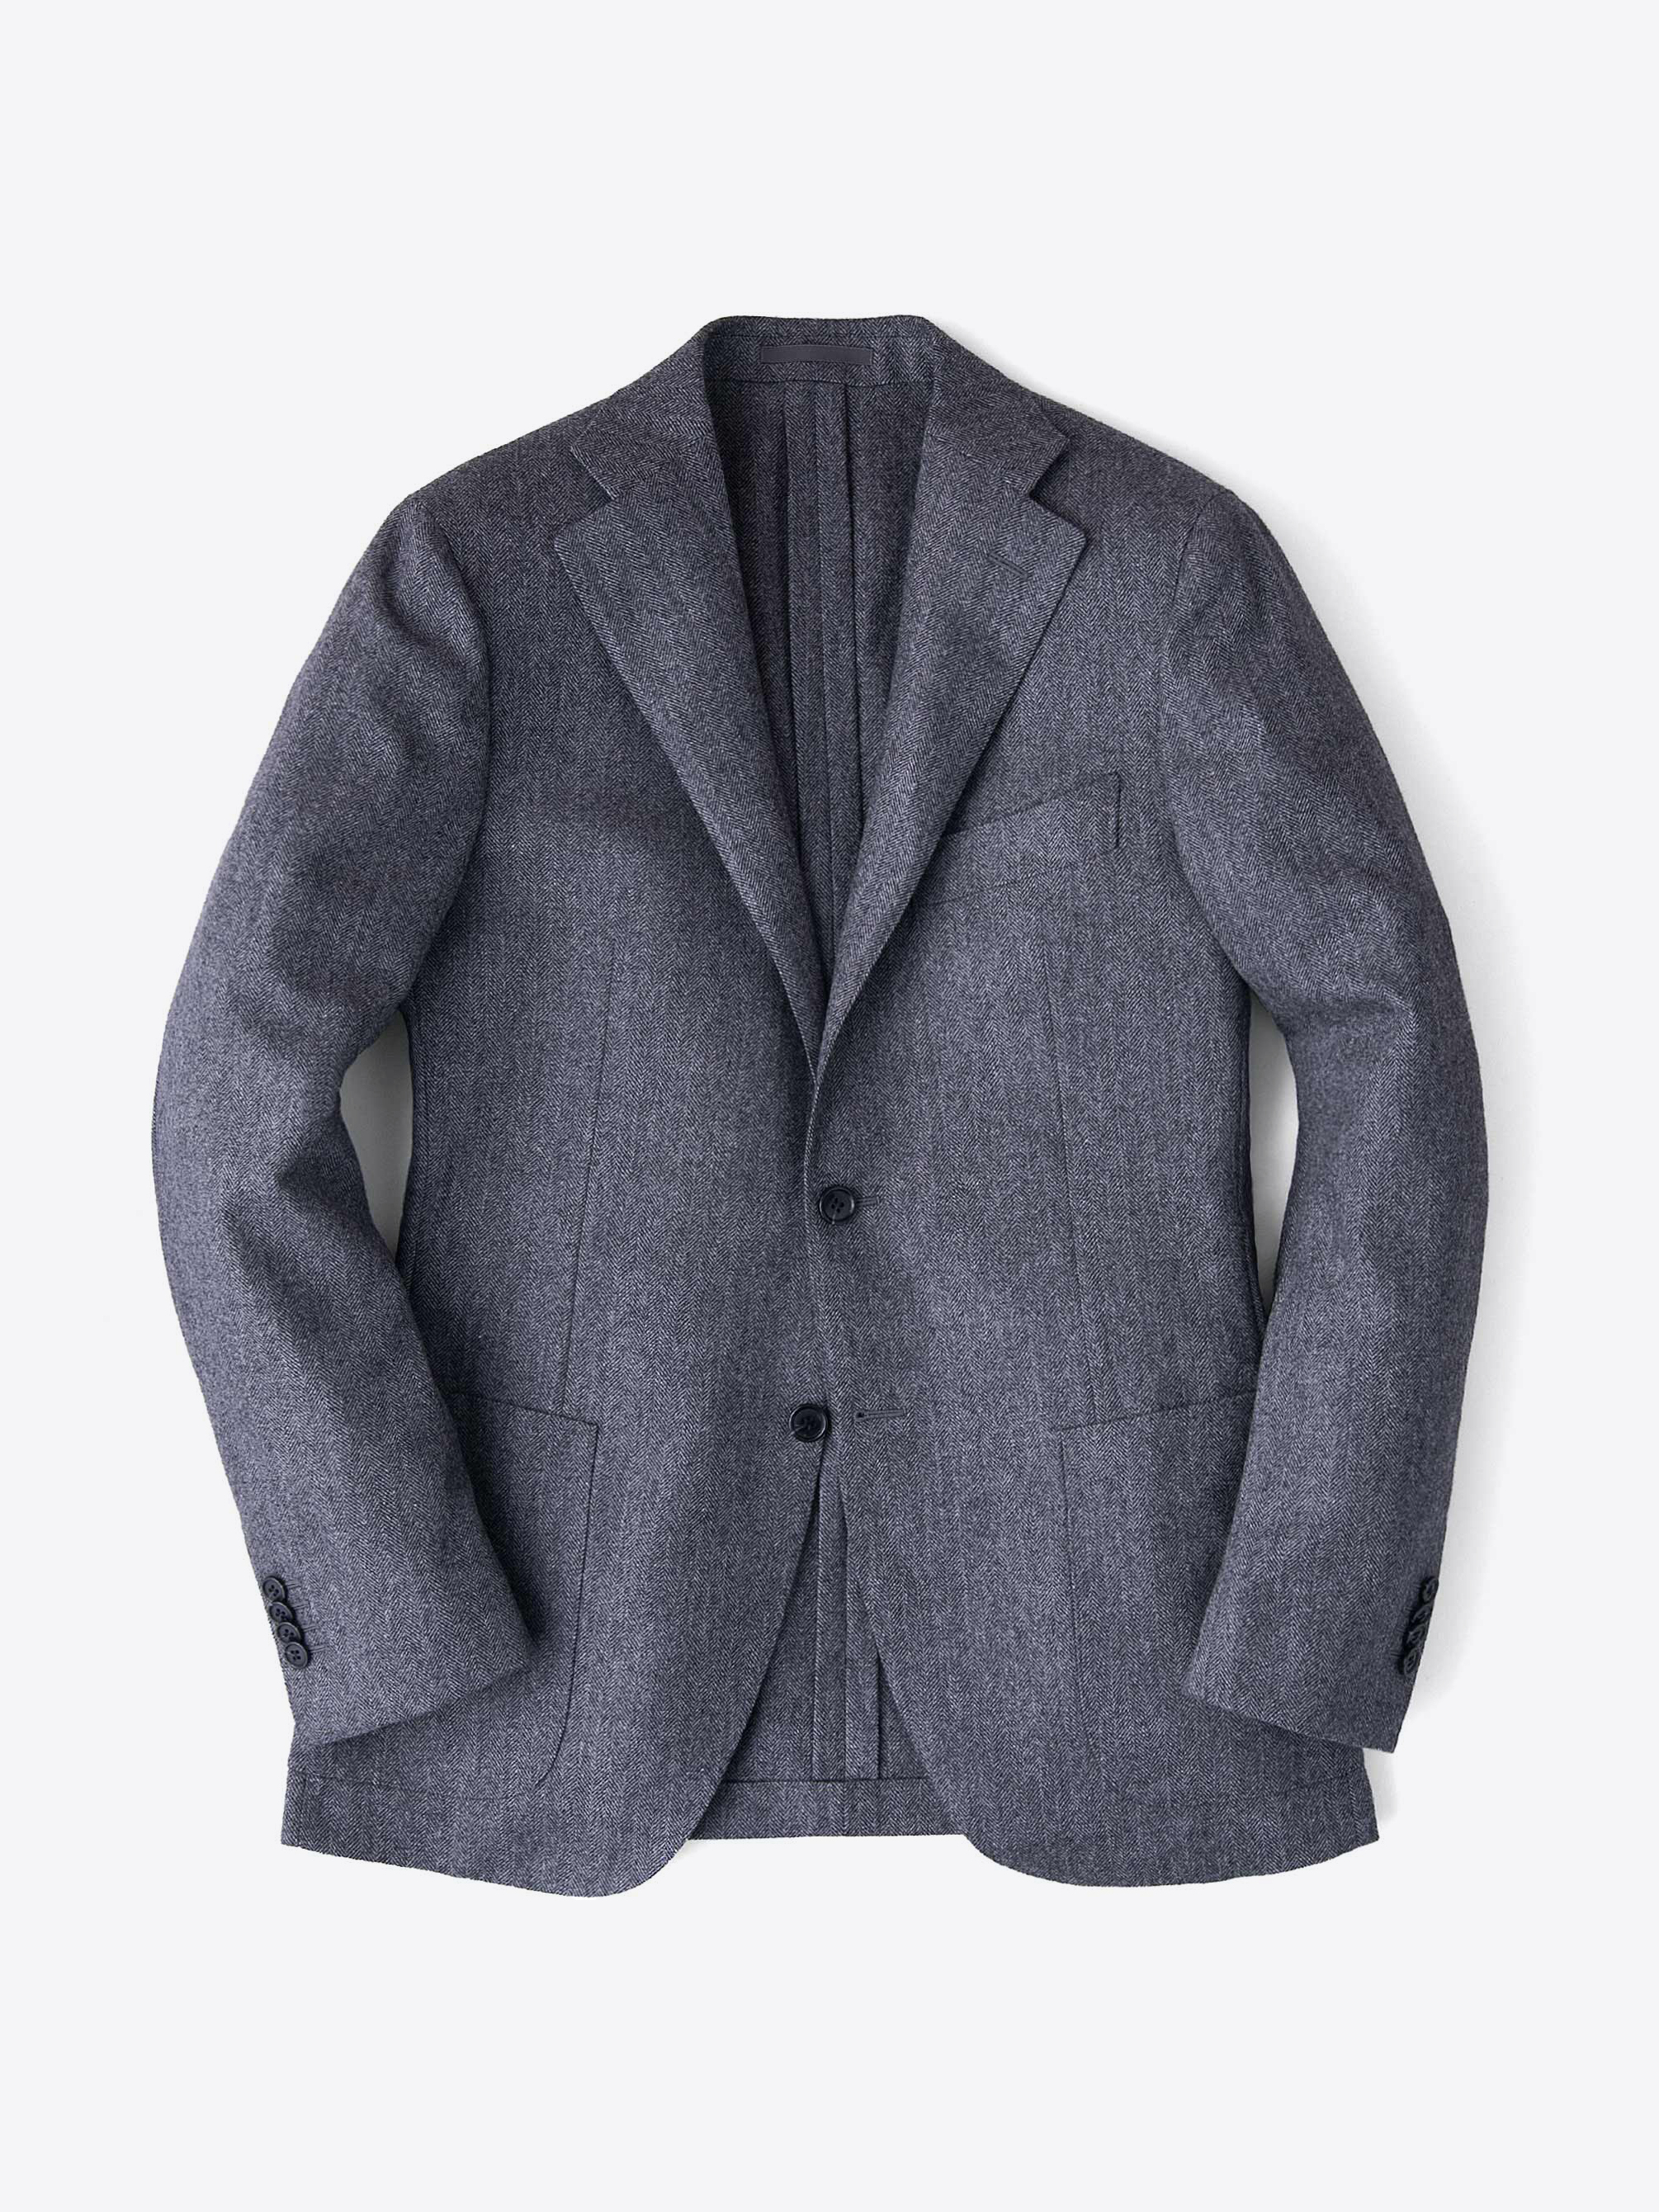 Zoom Image of Grey Wool Cashmere Herringbone Hudson Jacket